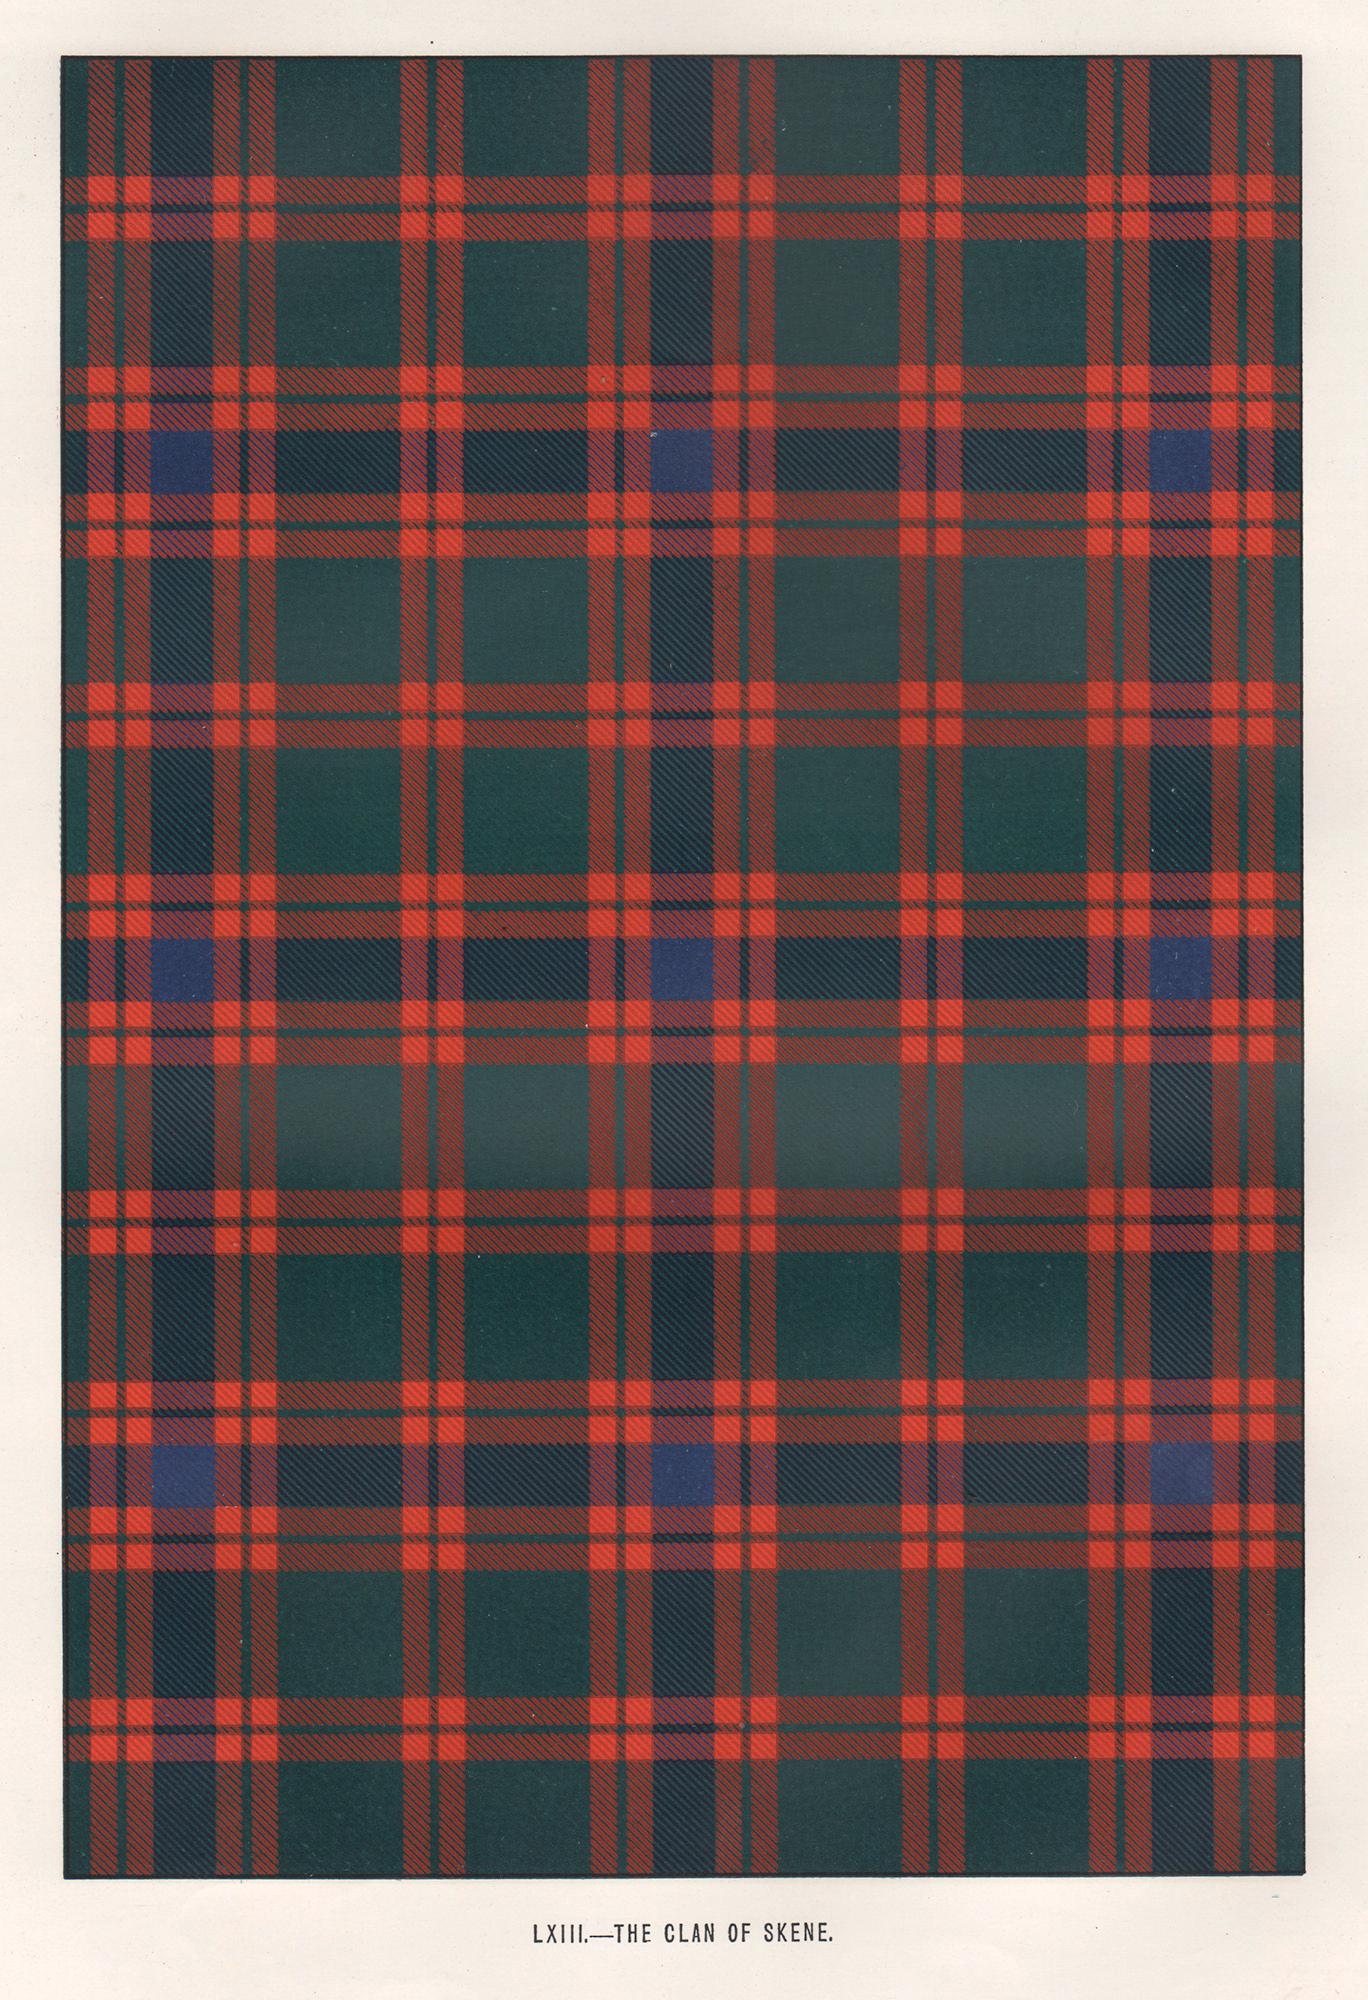 The Clan of Skene (Tartan), Scottish Scotland art design lithograph print